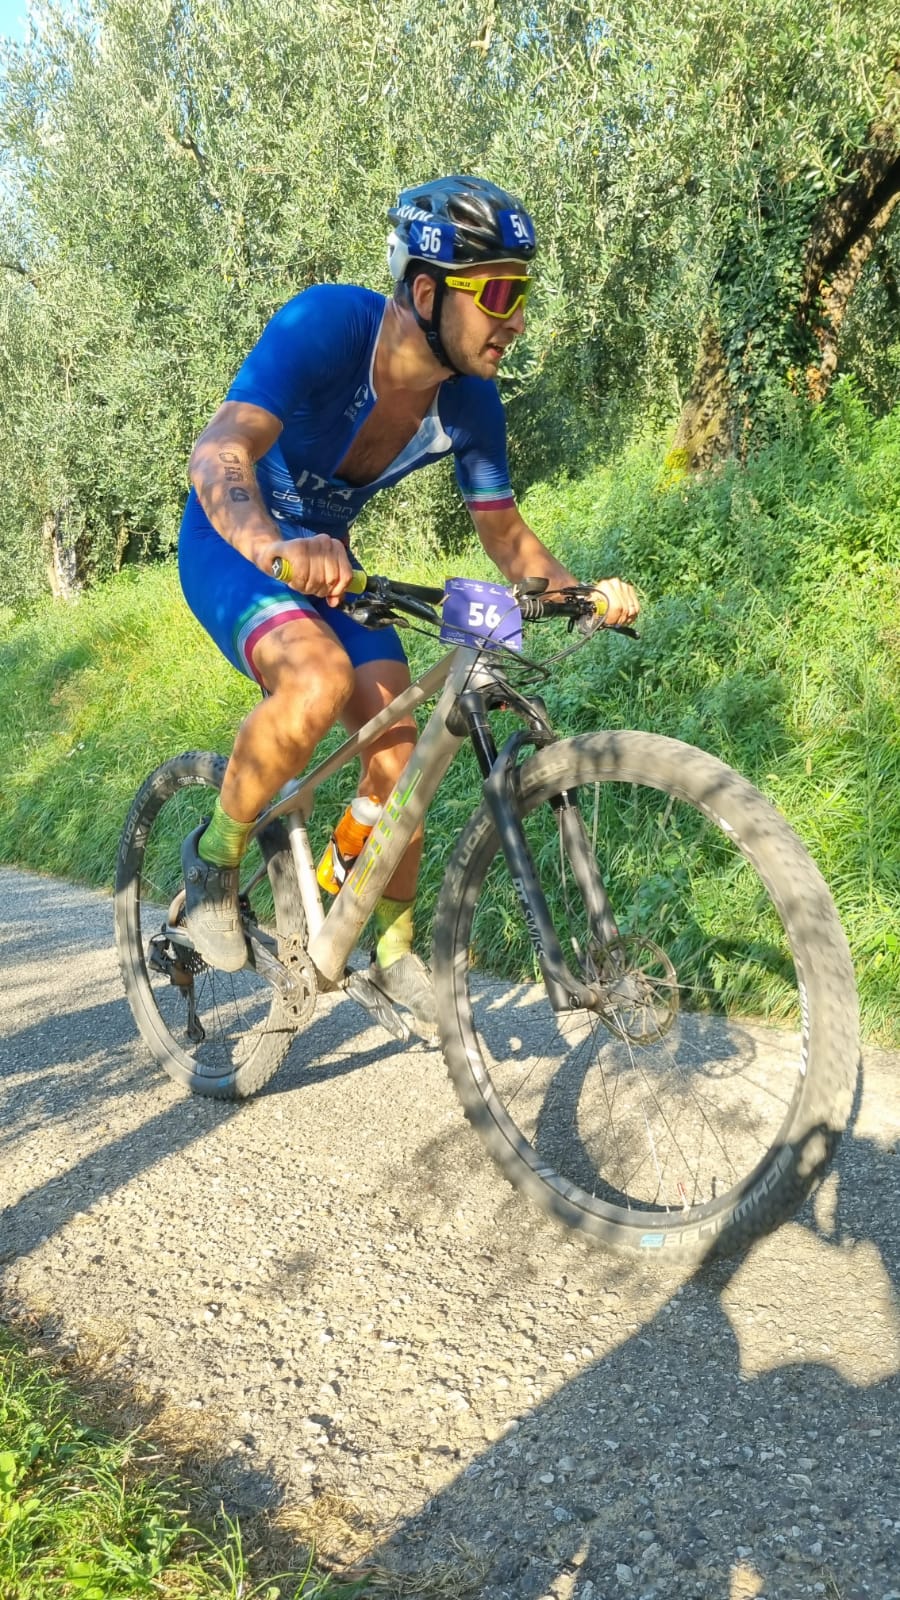 European Cross duathlon / triathlon championships Riva del Garda